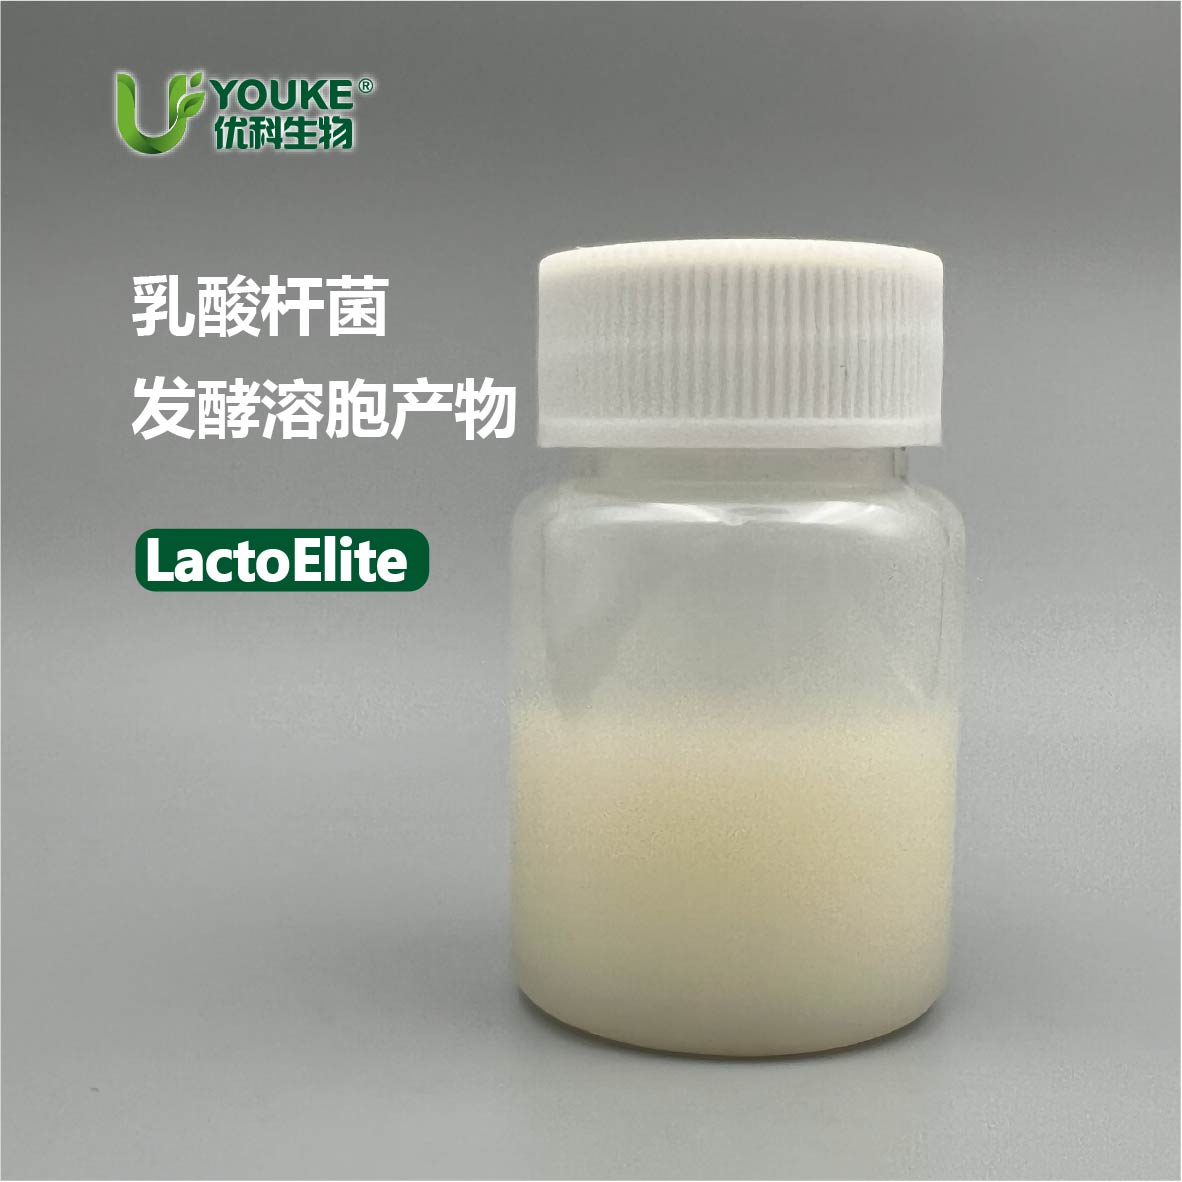 LactoElite 乳酸杆菌发酵溶胞产物